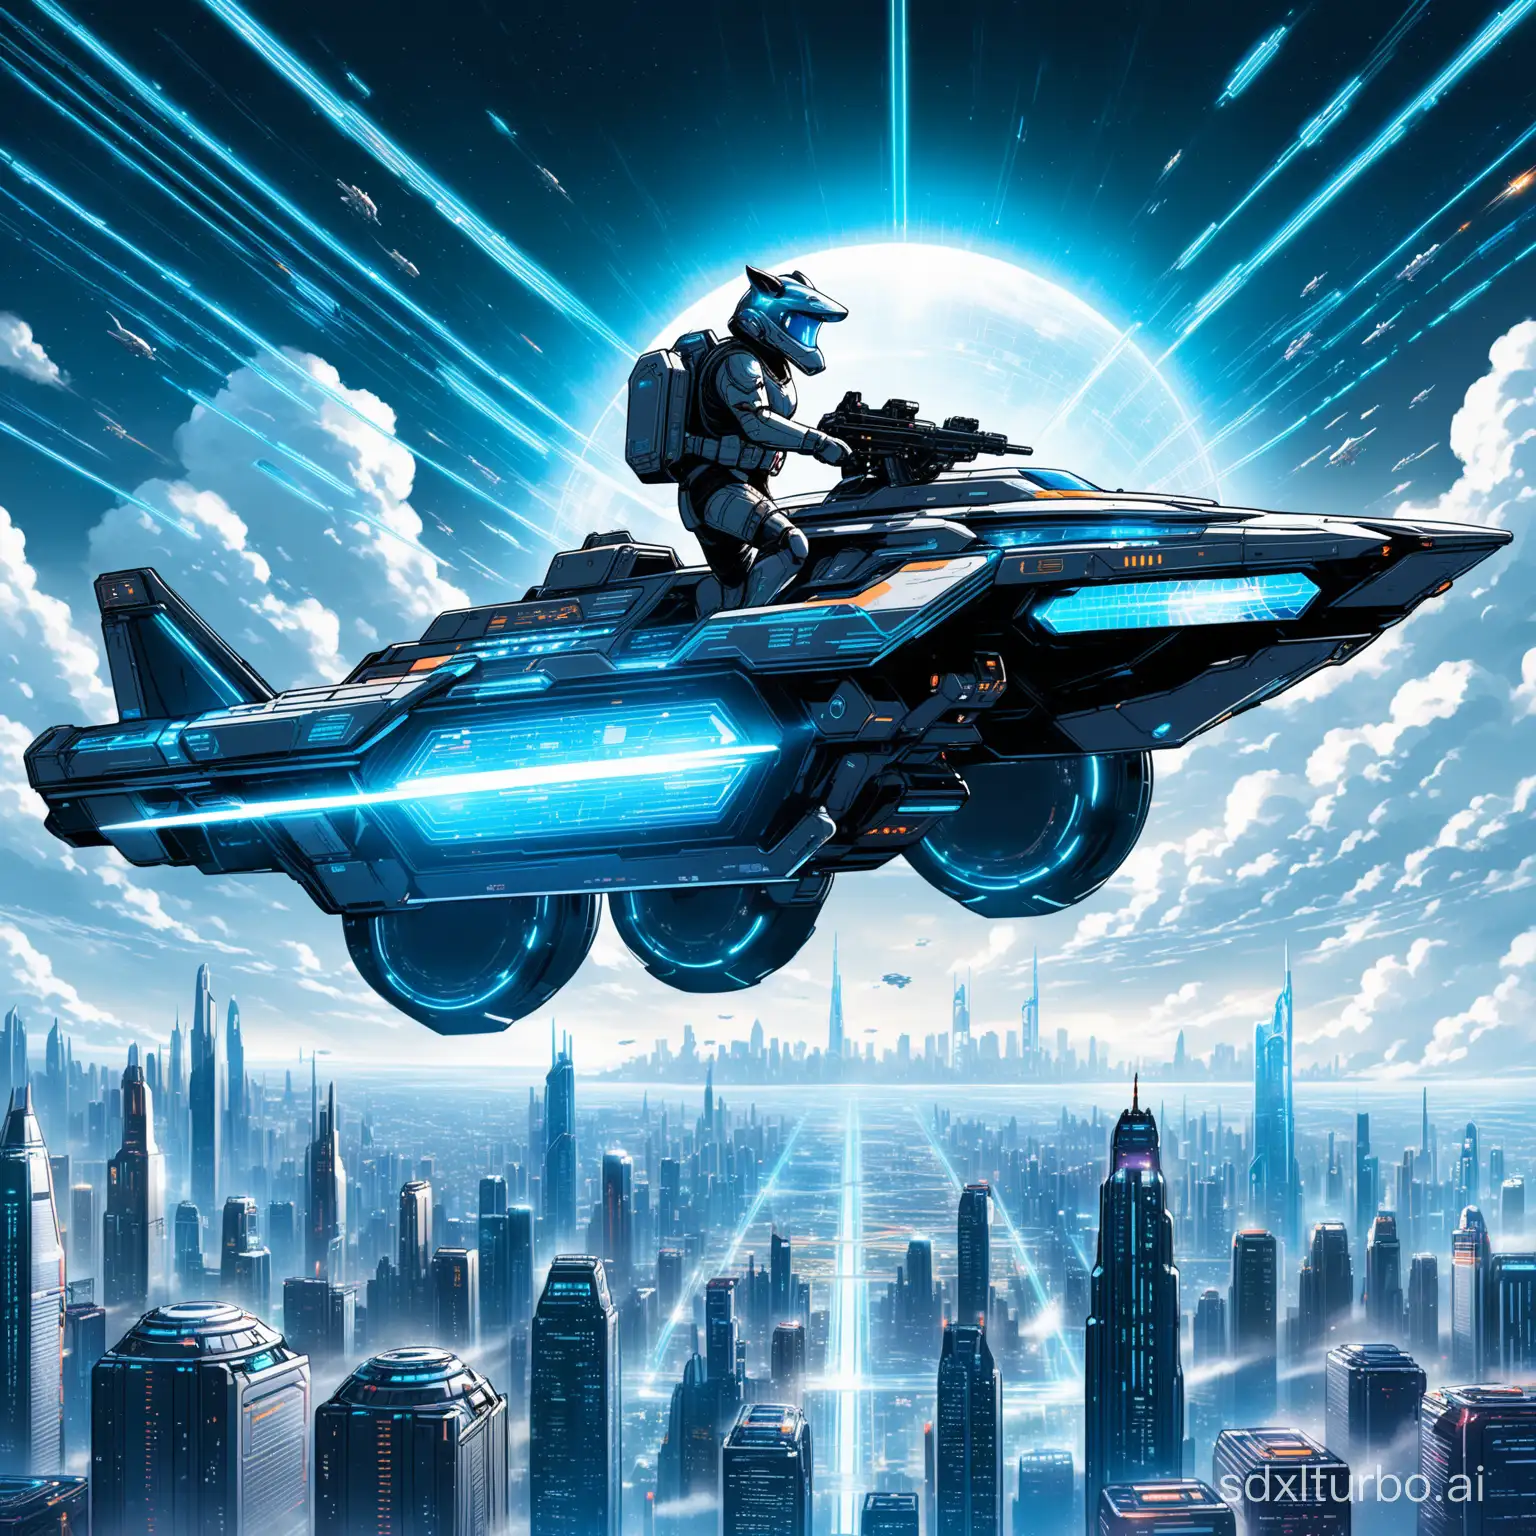 Futuristic-SciFi-Dog-in-HighTech-Armor-Soaring-Above-Vibrant-City-Skyline